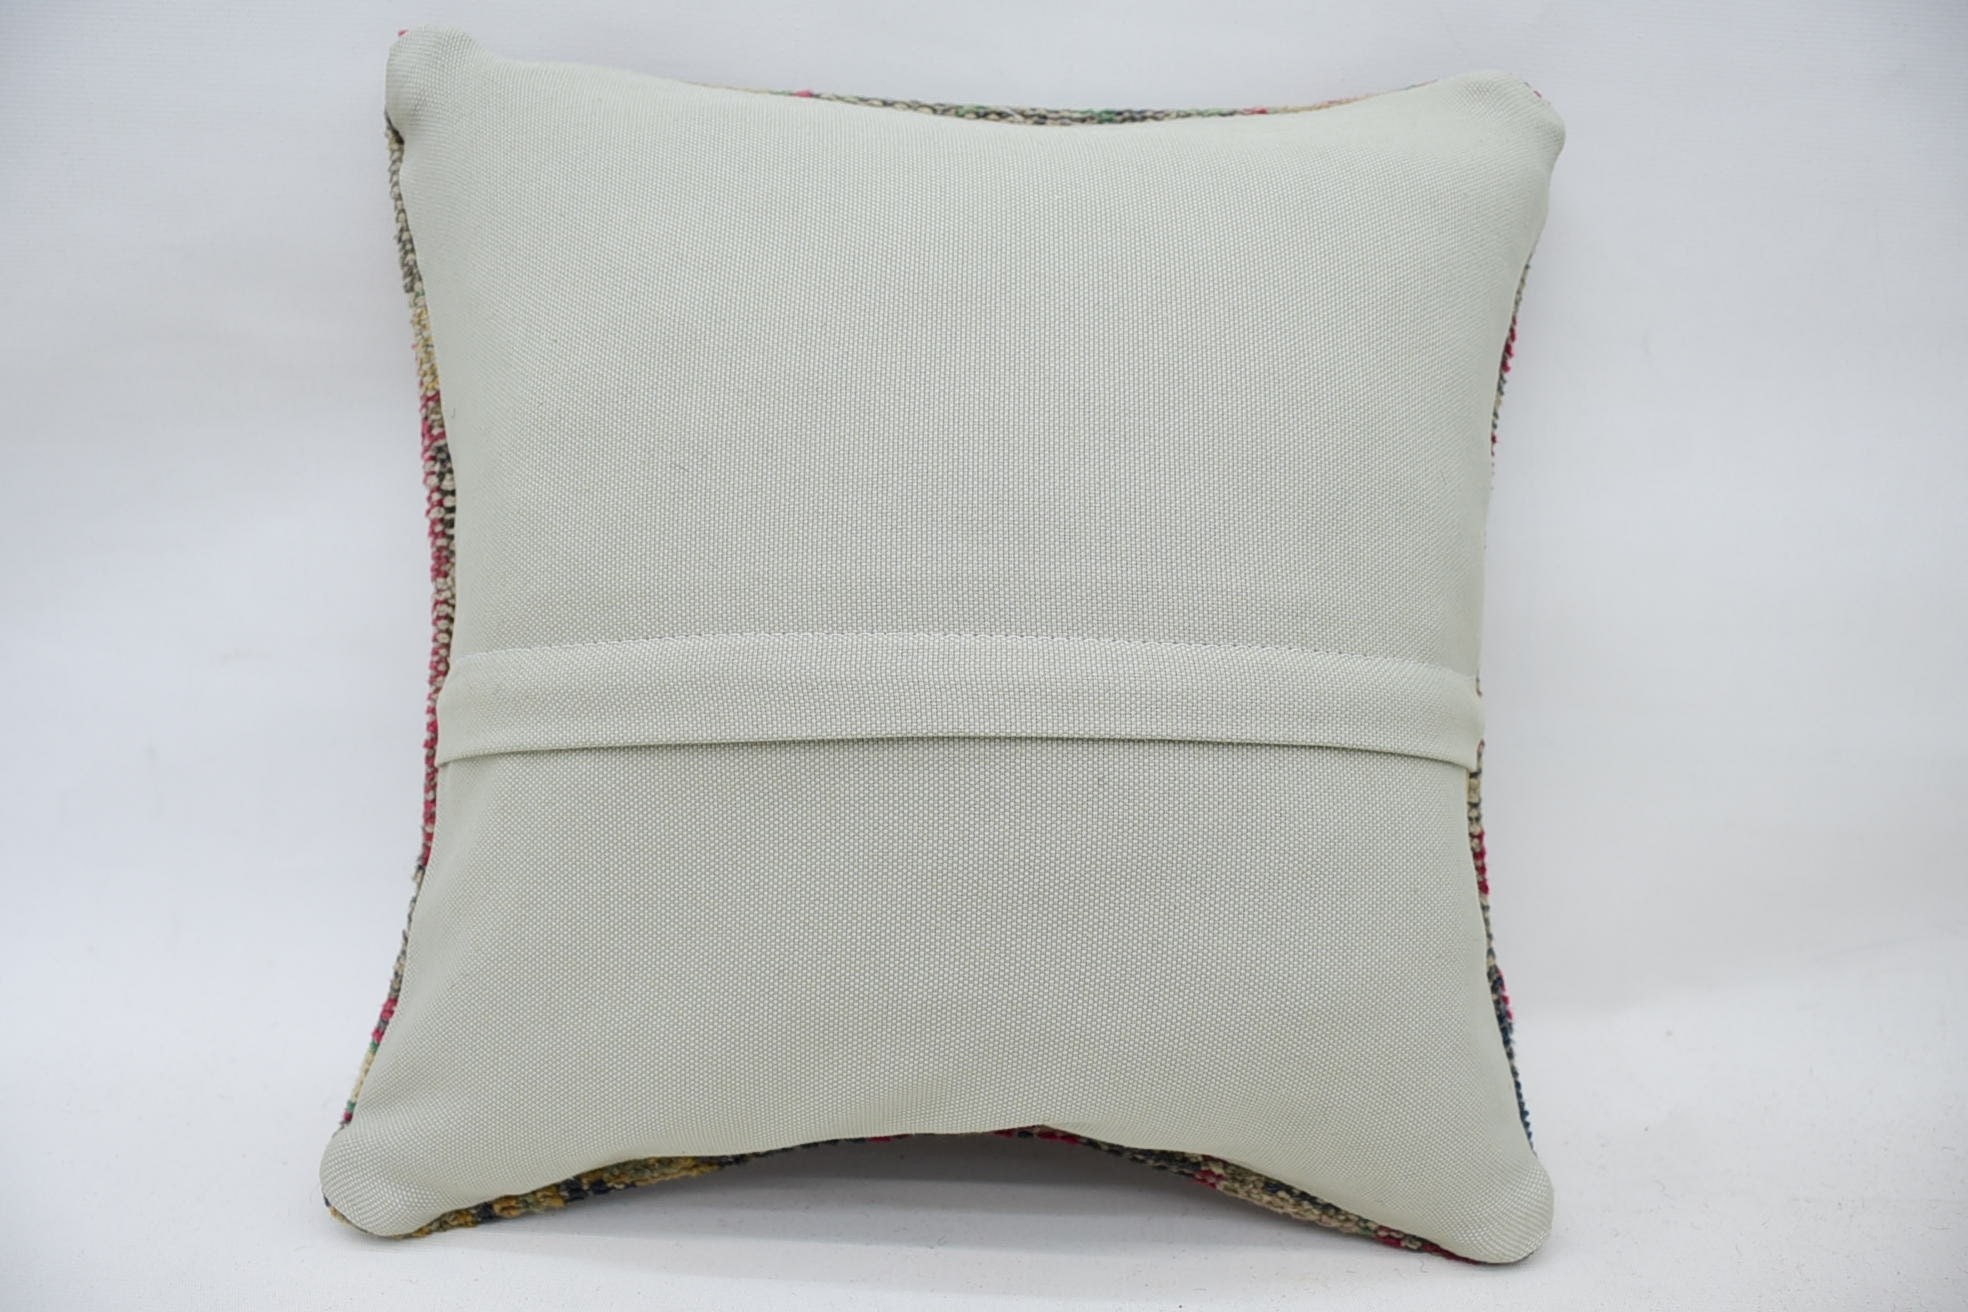 14"x14" Beige Cushion, Vintage Cushion Cover, Boho Pillow, Vintage Kilim Throw Pillow, Ikat Pillow Case, Boho Pillow Sham Cover